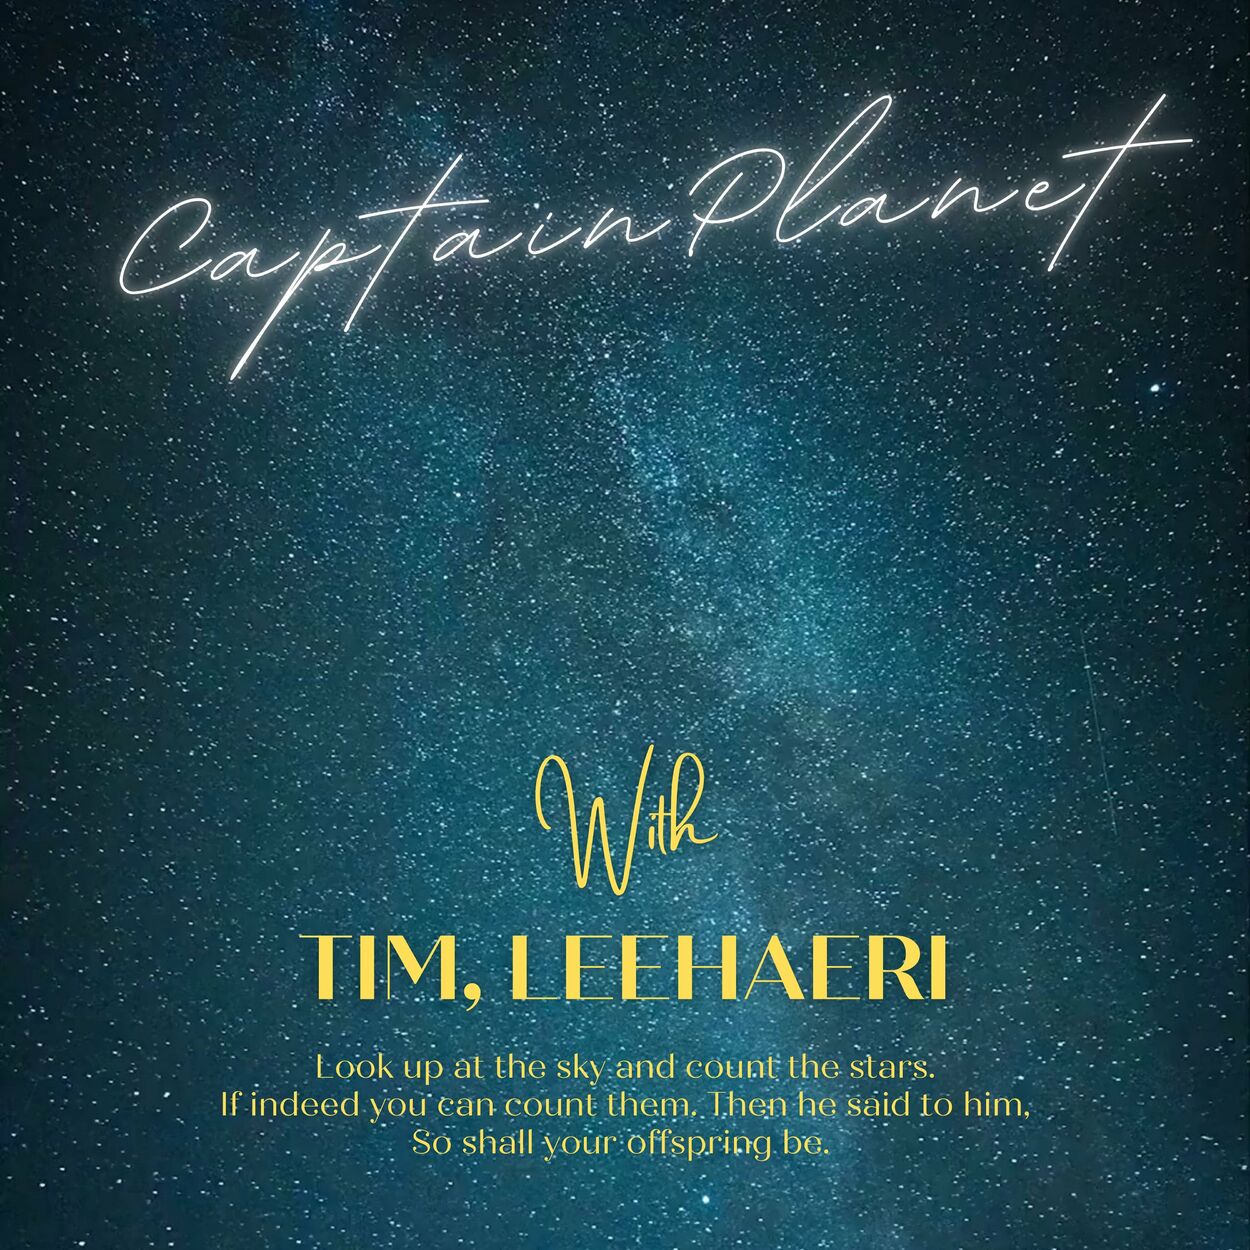 Captain Planet, Tim, Lee Hae Ri – Promise – Single